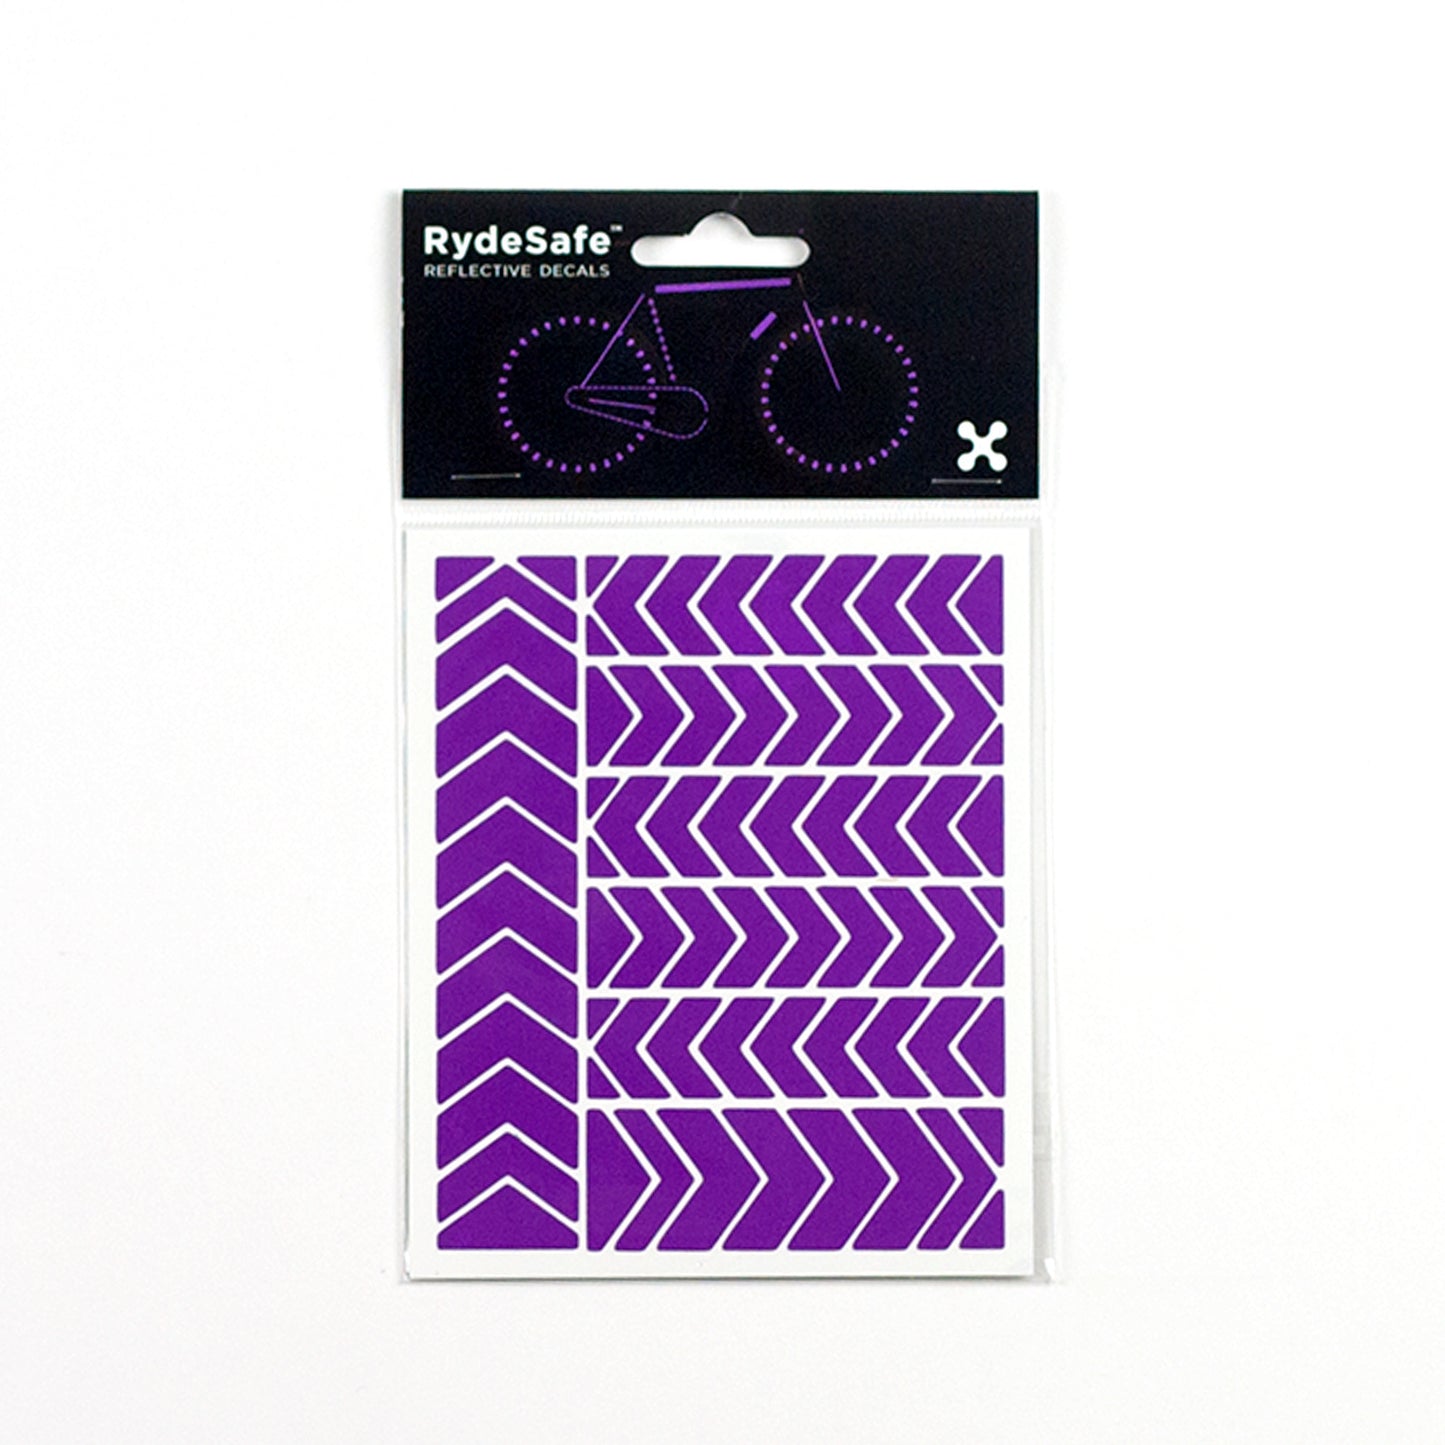 RydeSafe Reflective Decals - Chevron Kit - Small (Violet)